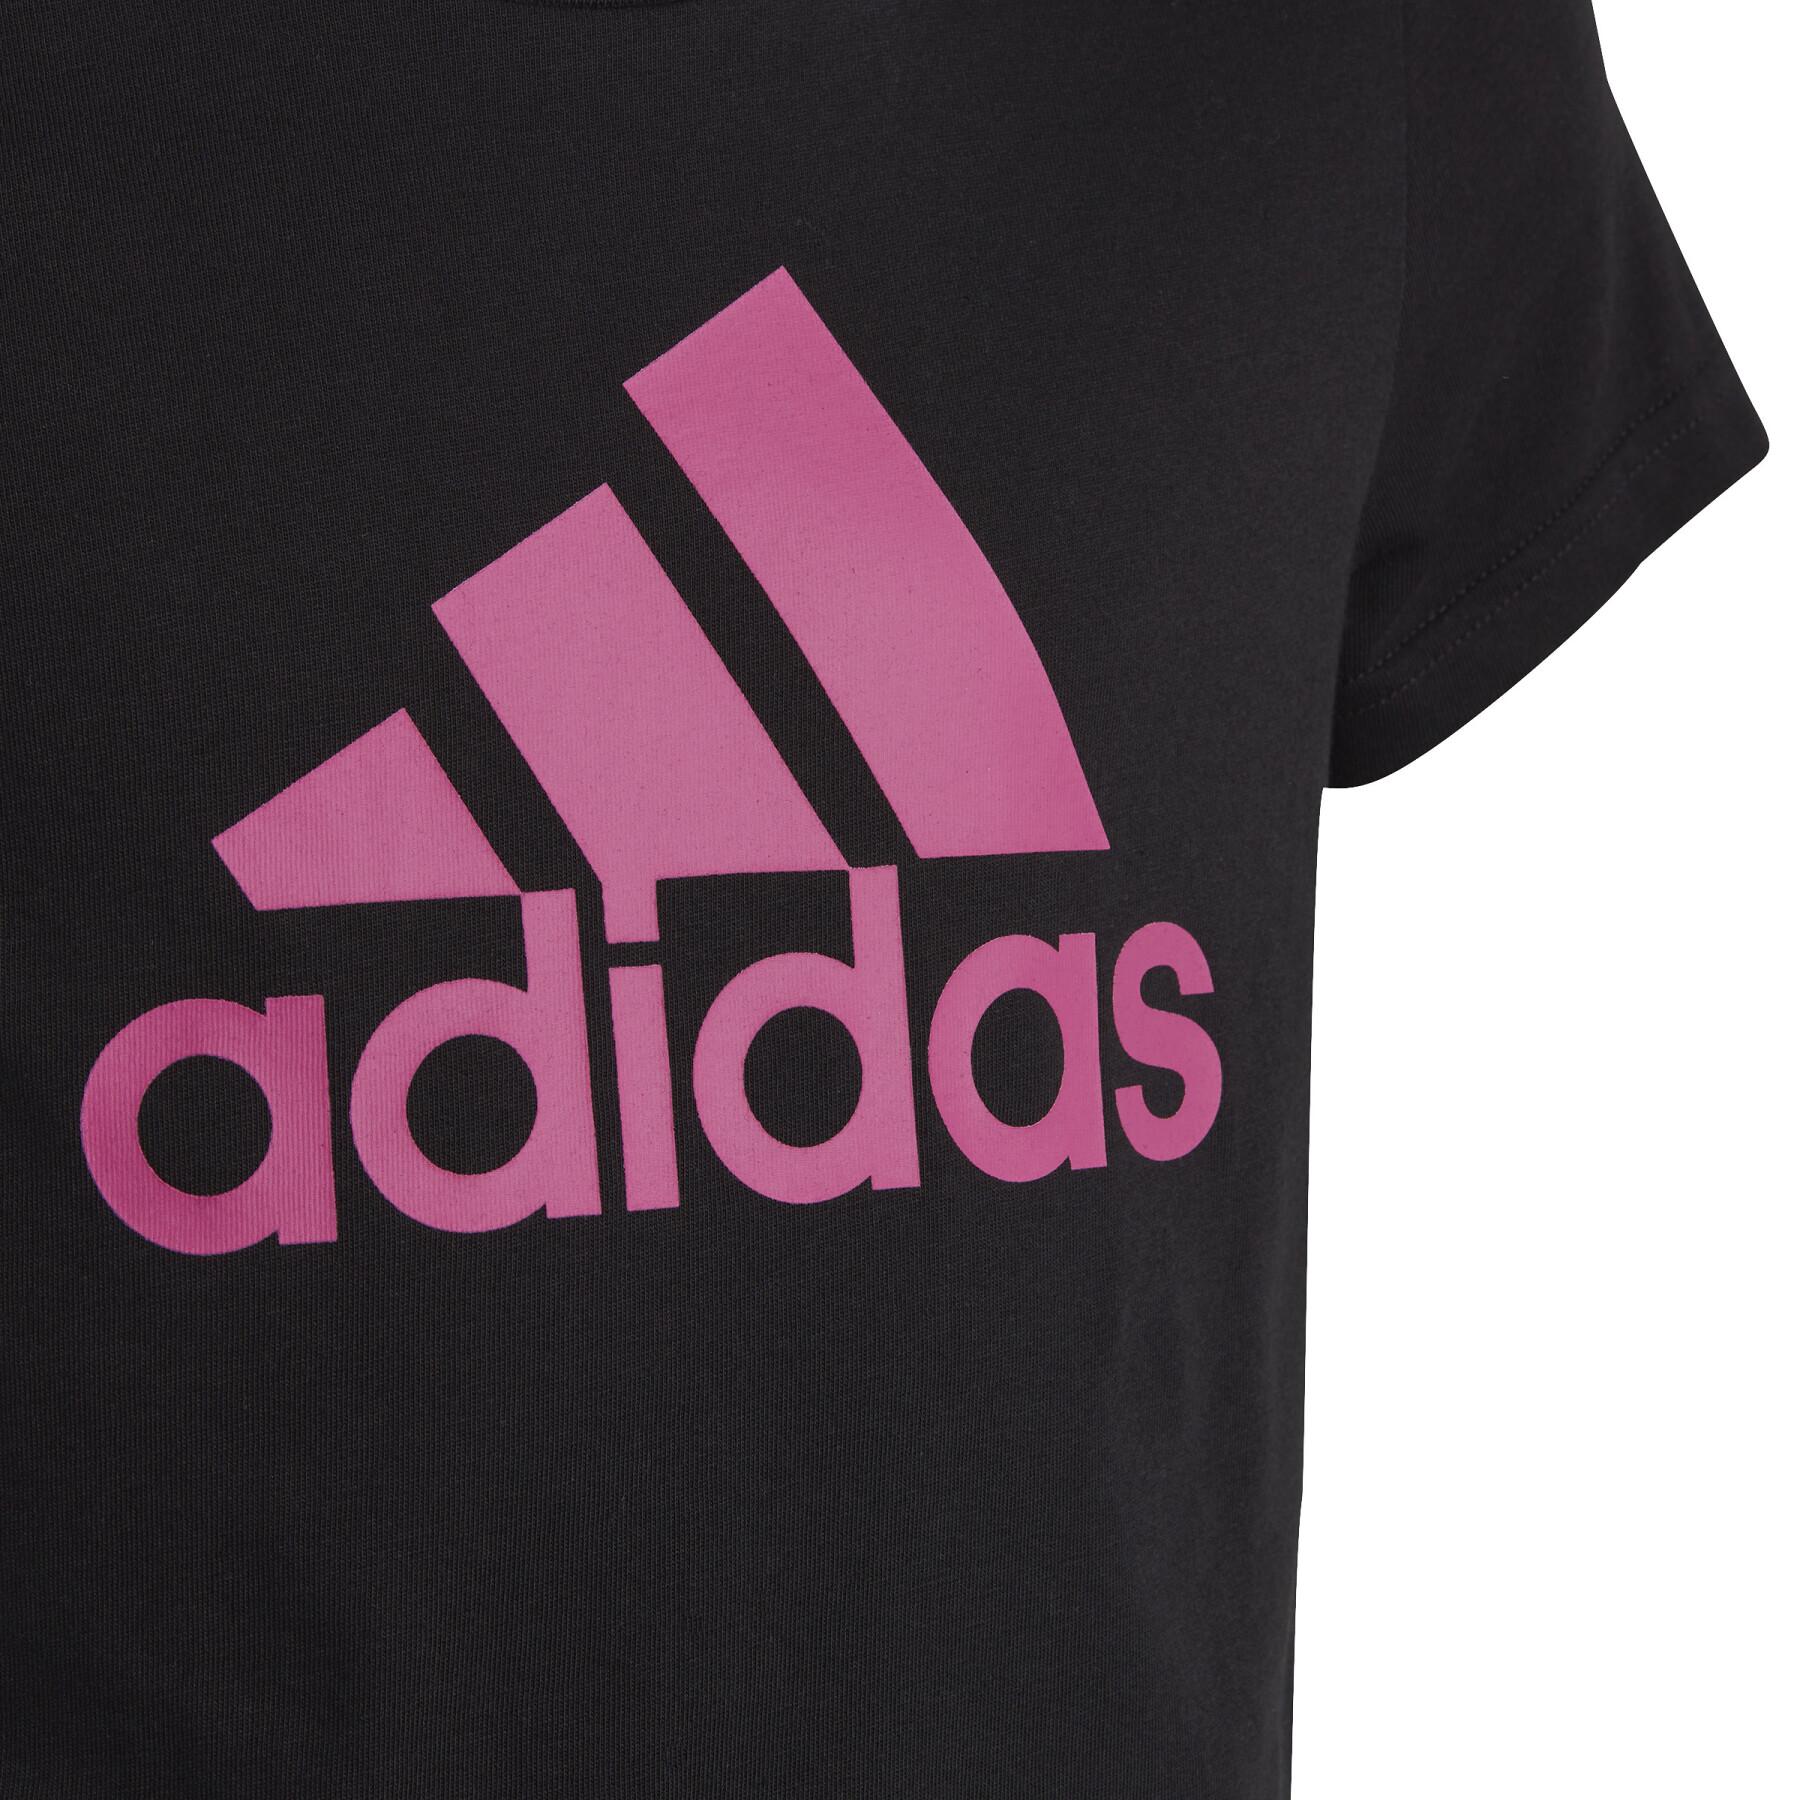 T-shirt katoen groot logo meisje adidas Essentials